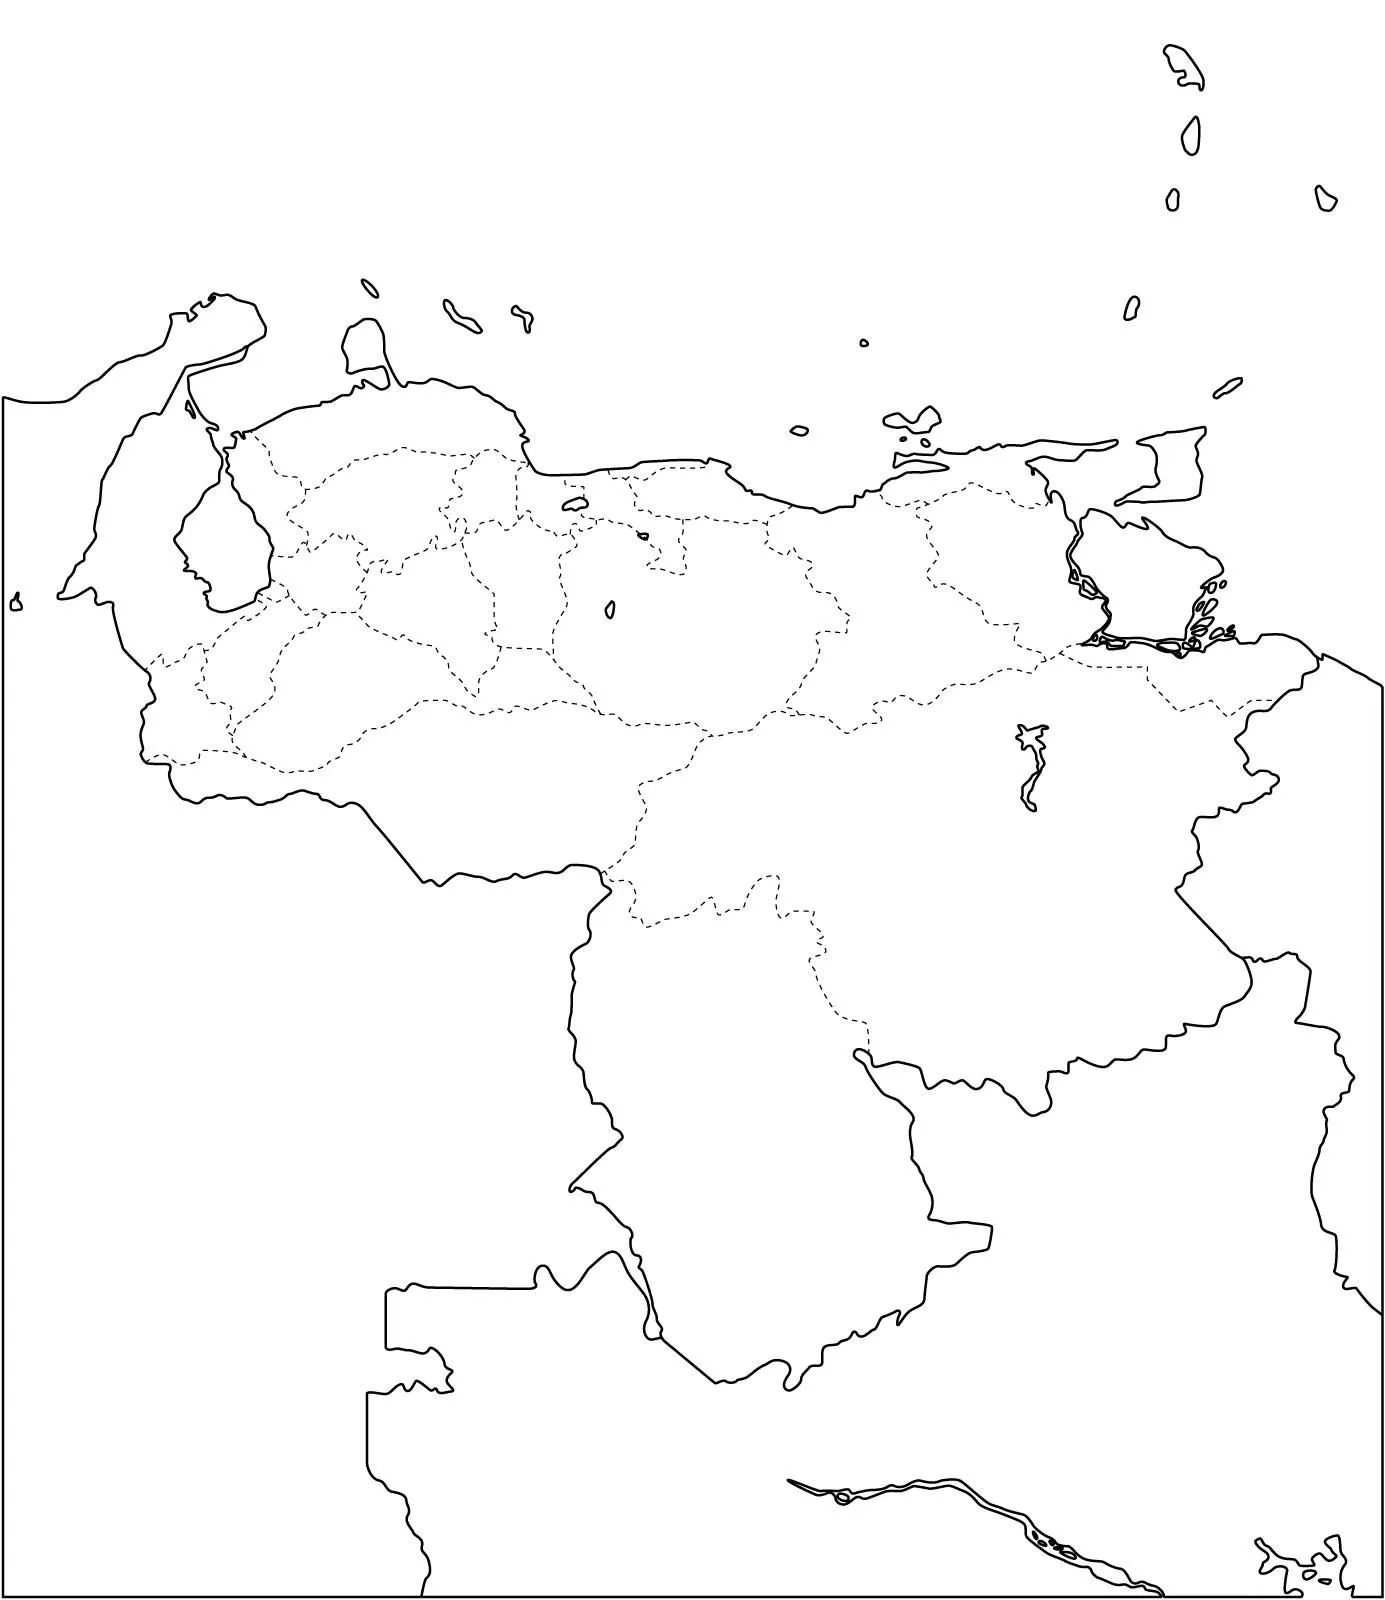 Mapa político mudo de Venezuela para imprimir Mapa de estados de ...